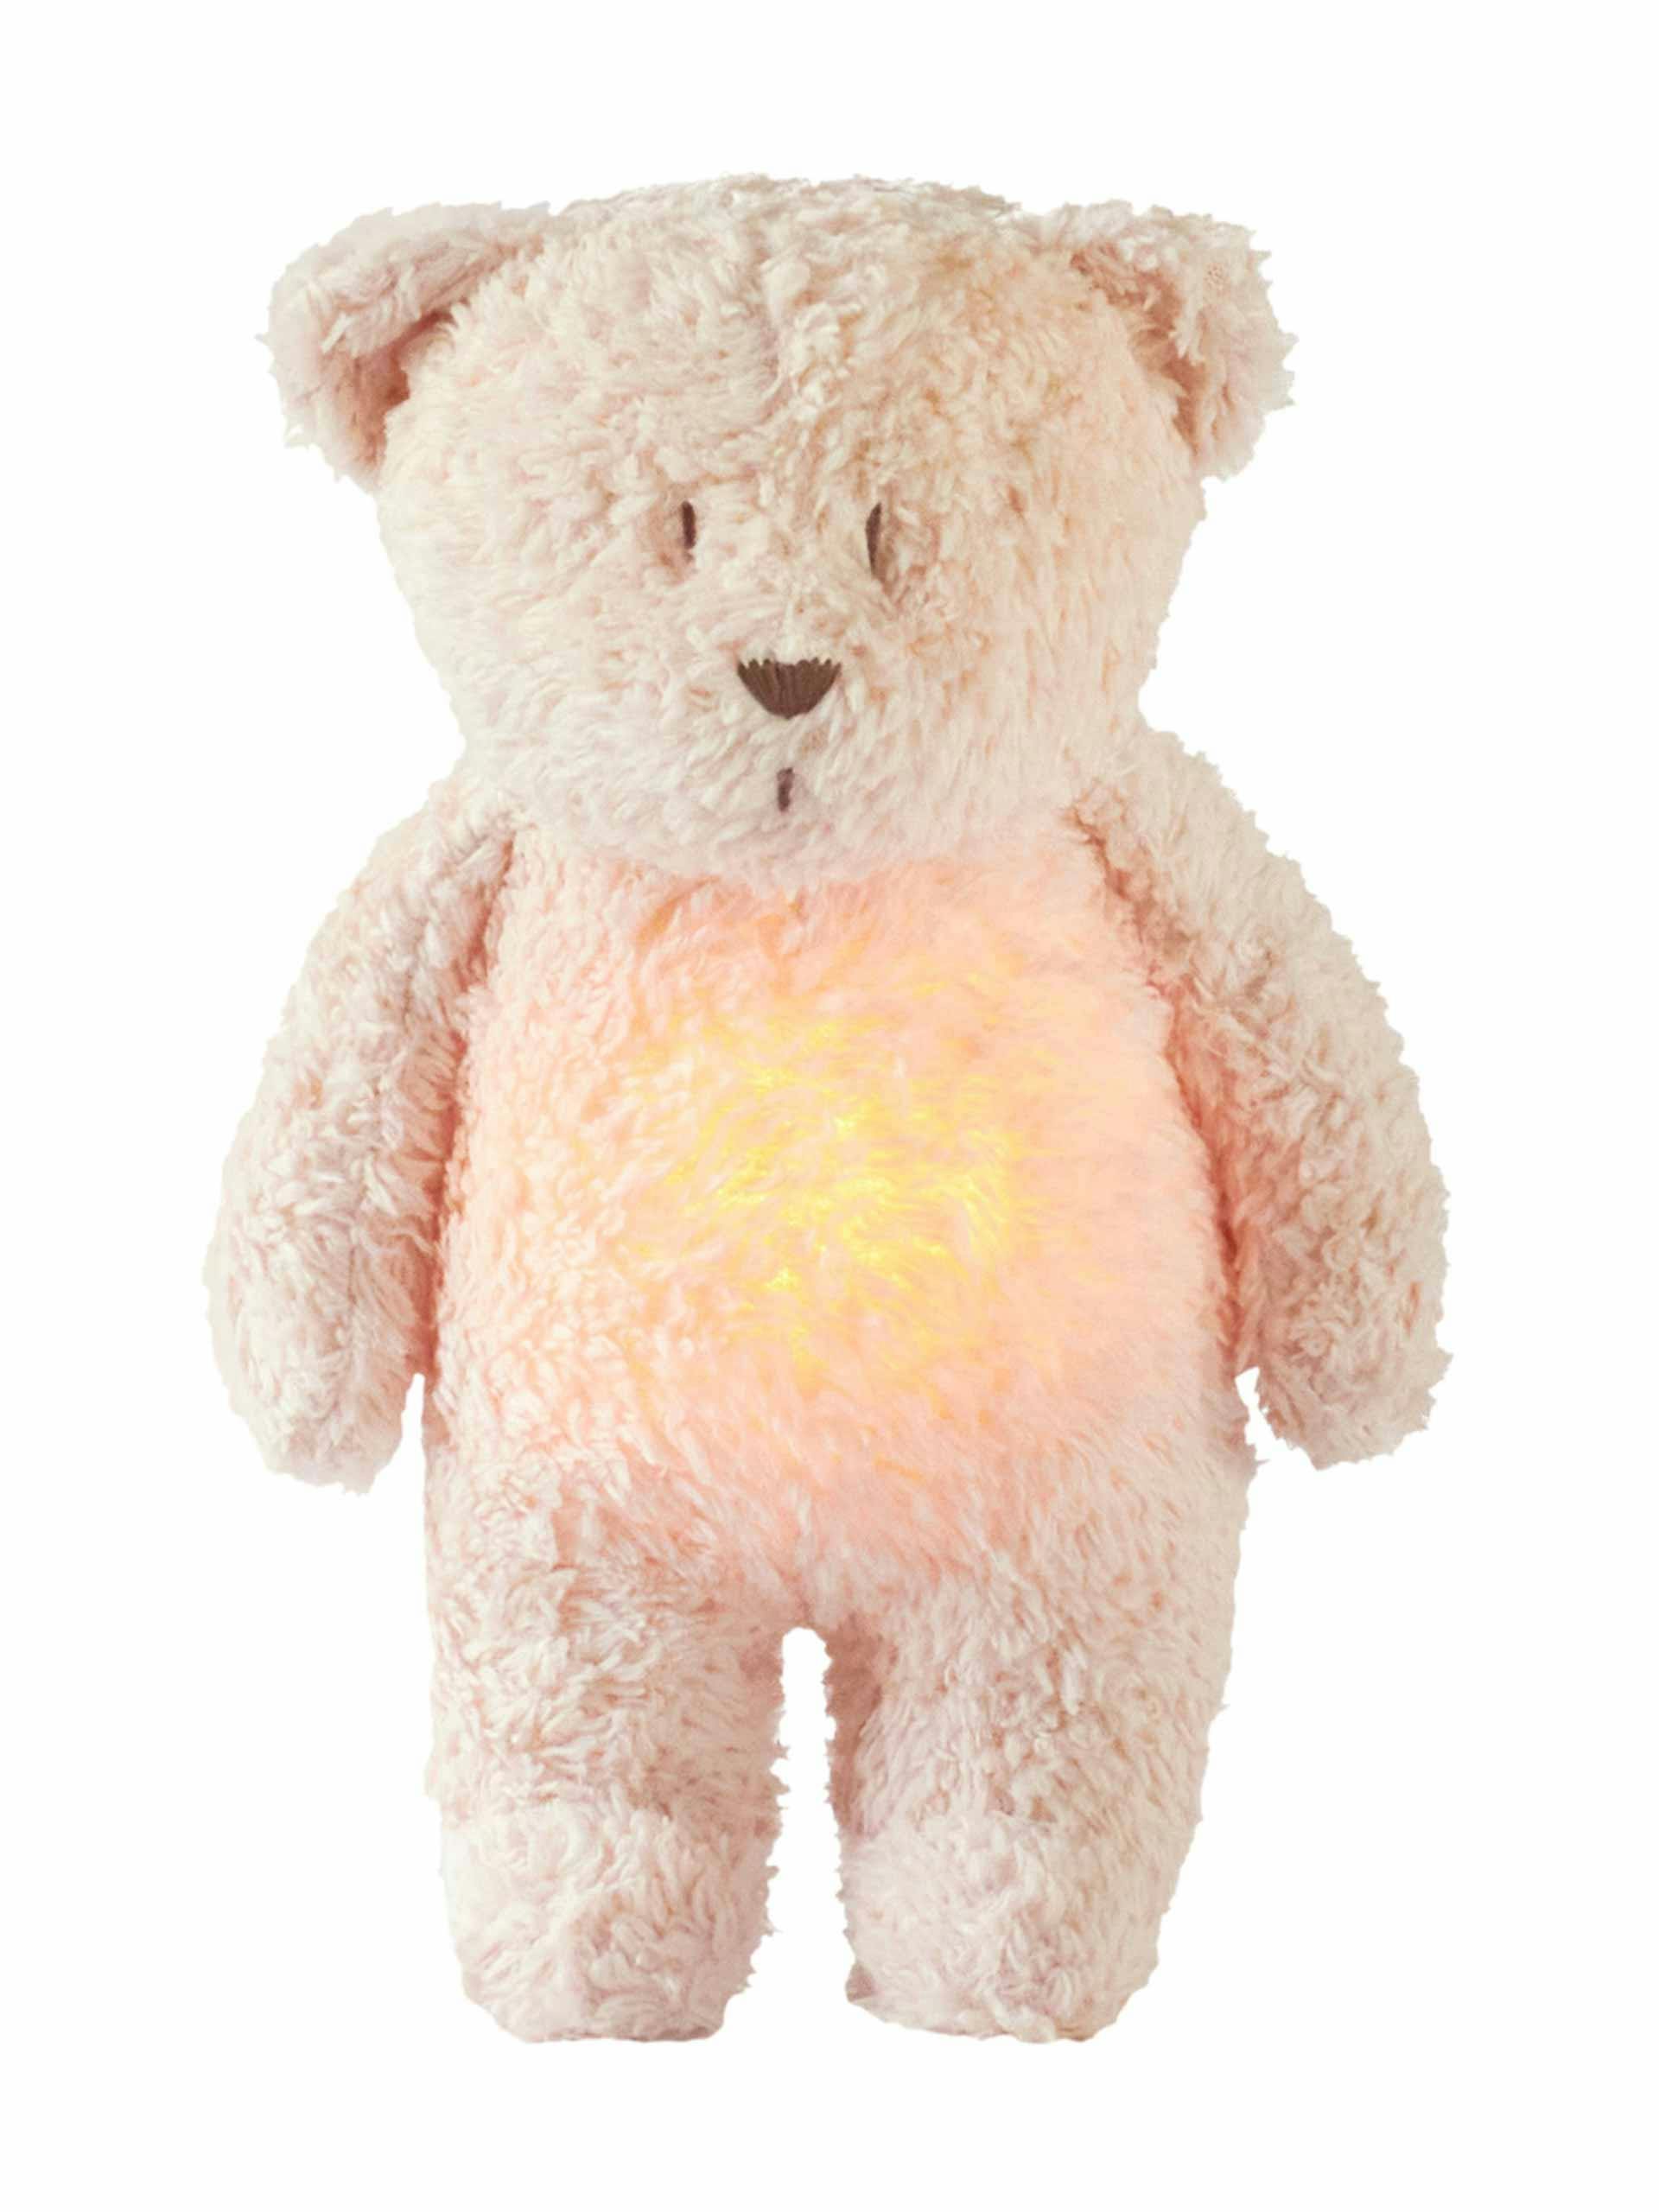 Musical nightlight teddy bear